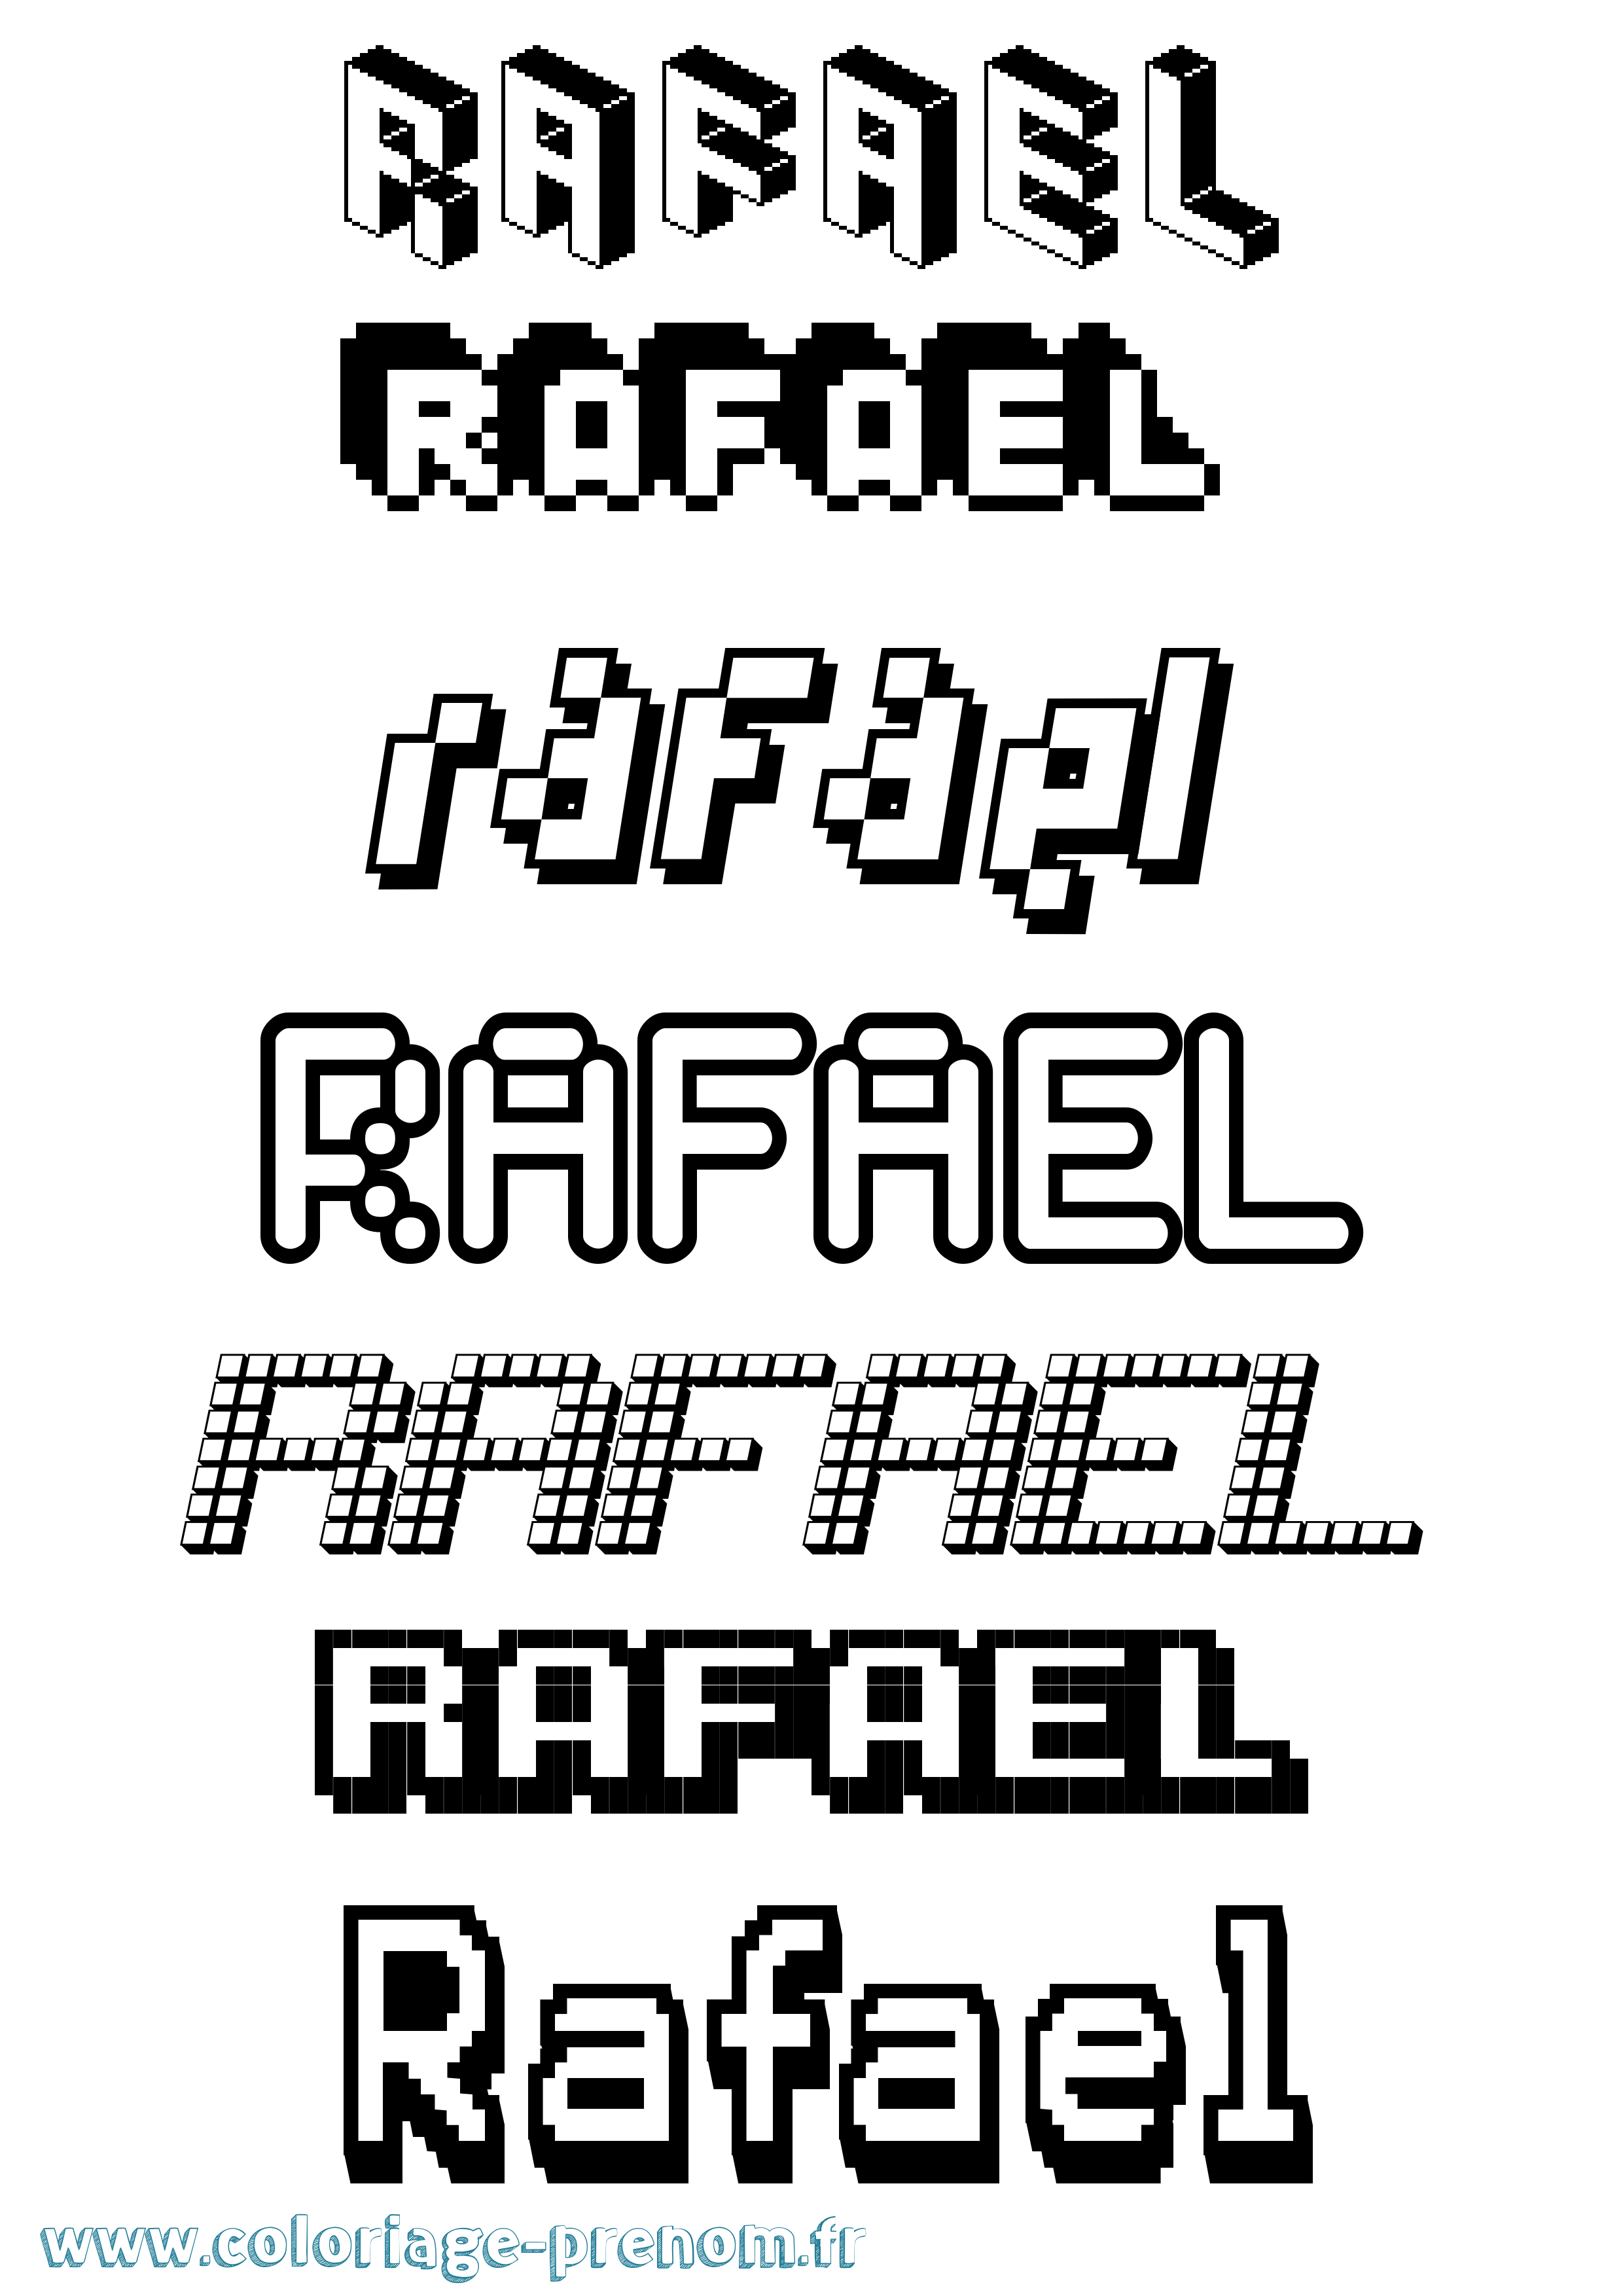 Coloriage prénom Rafael Pixel